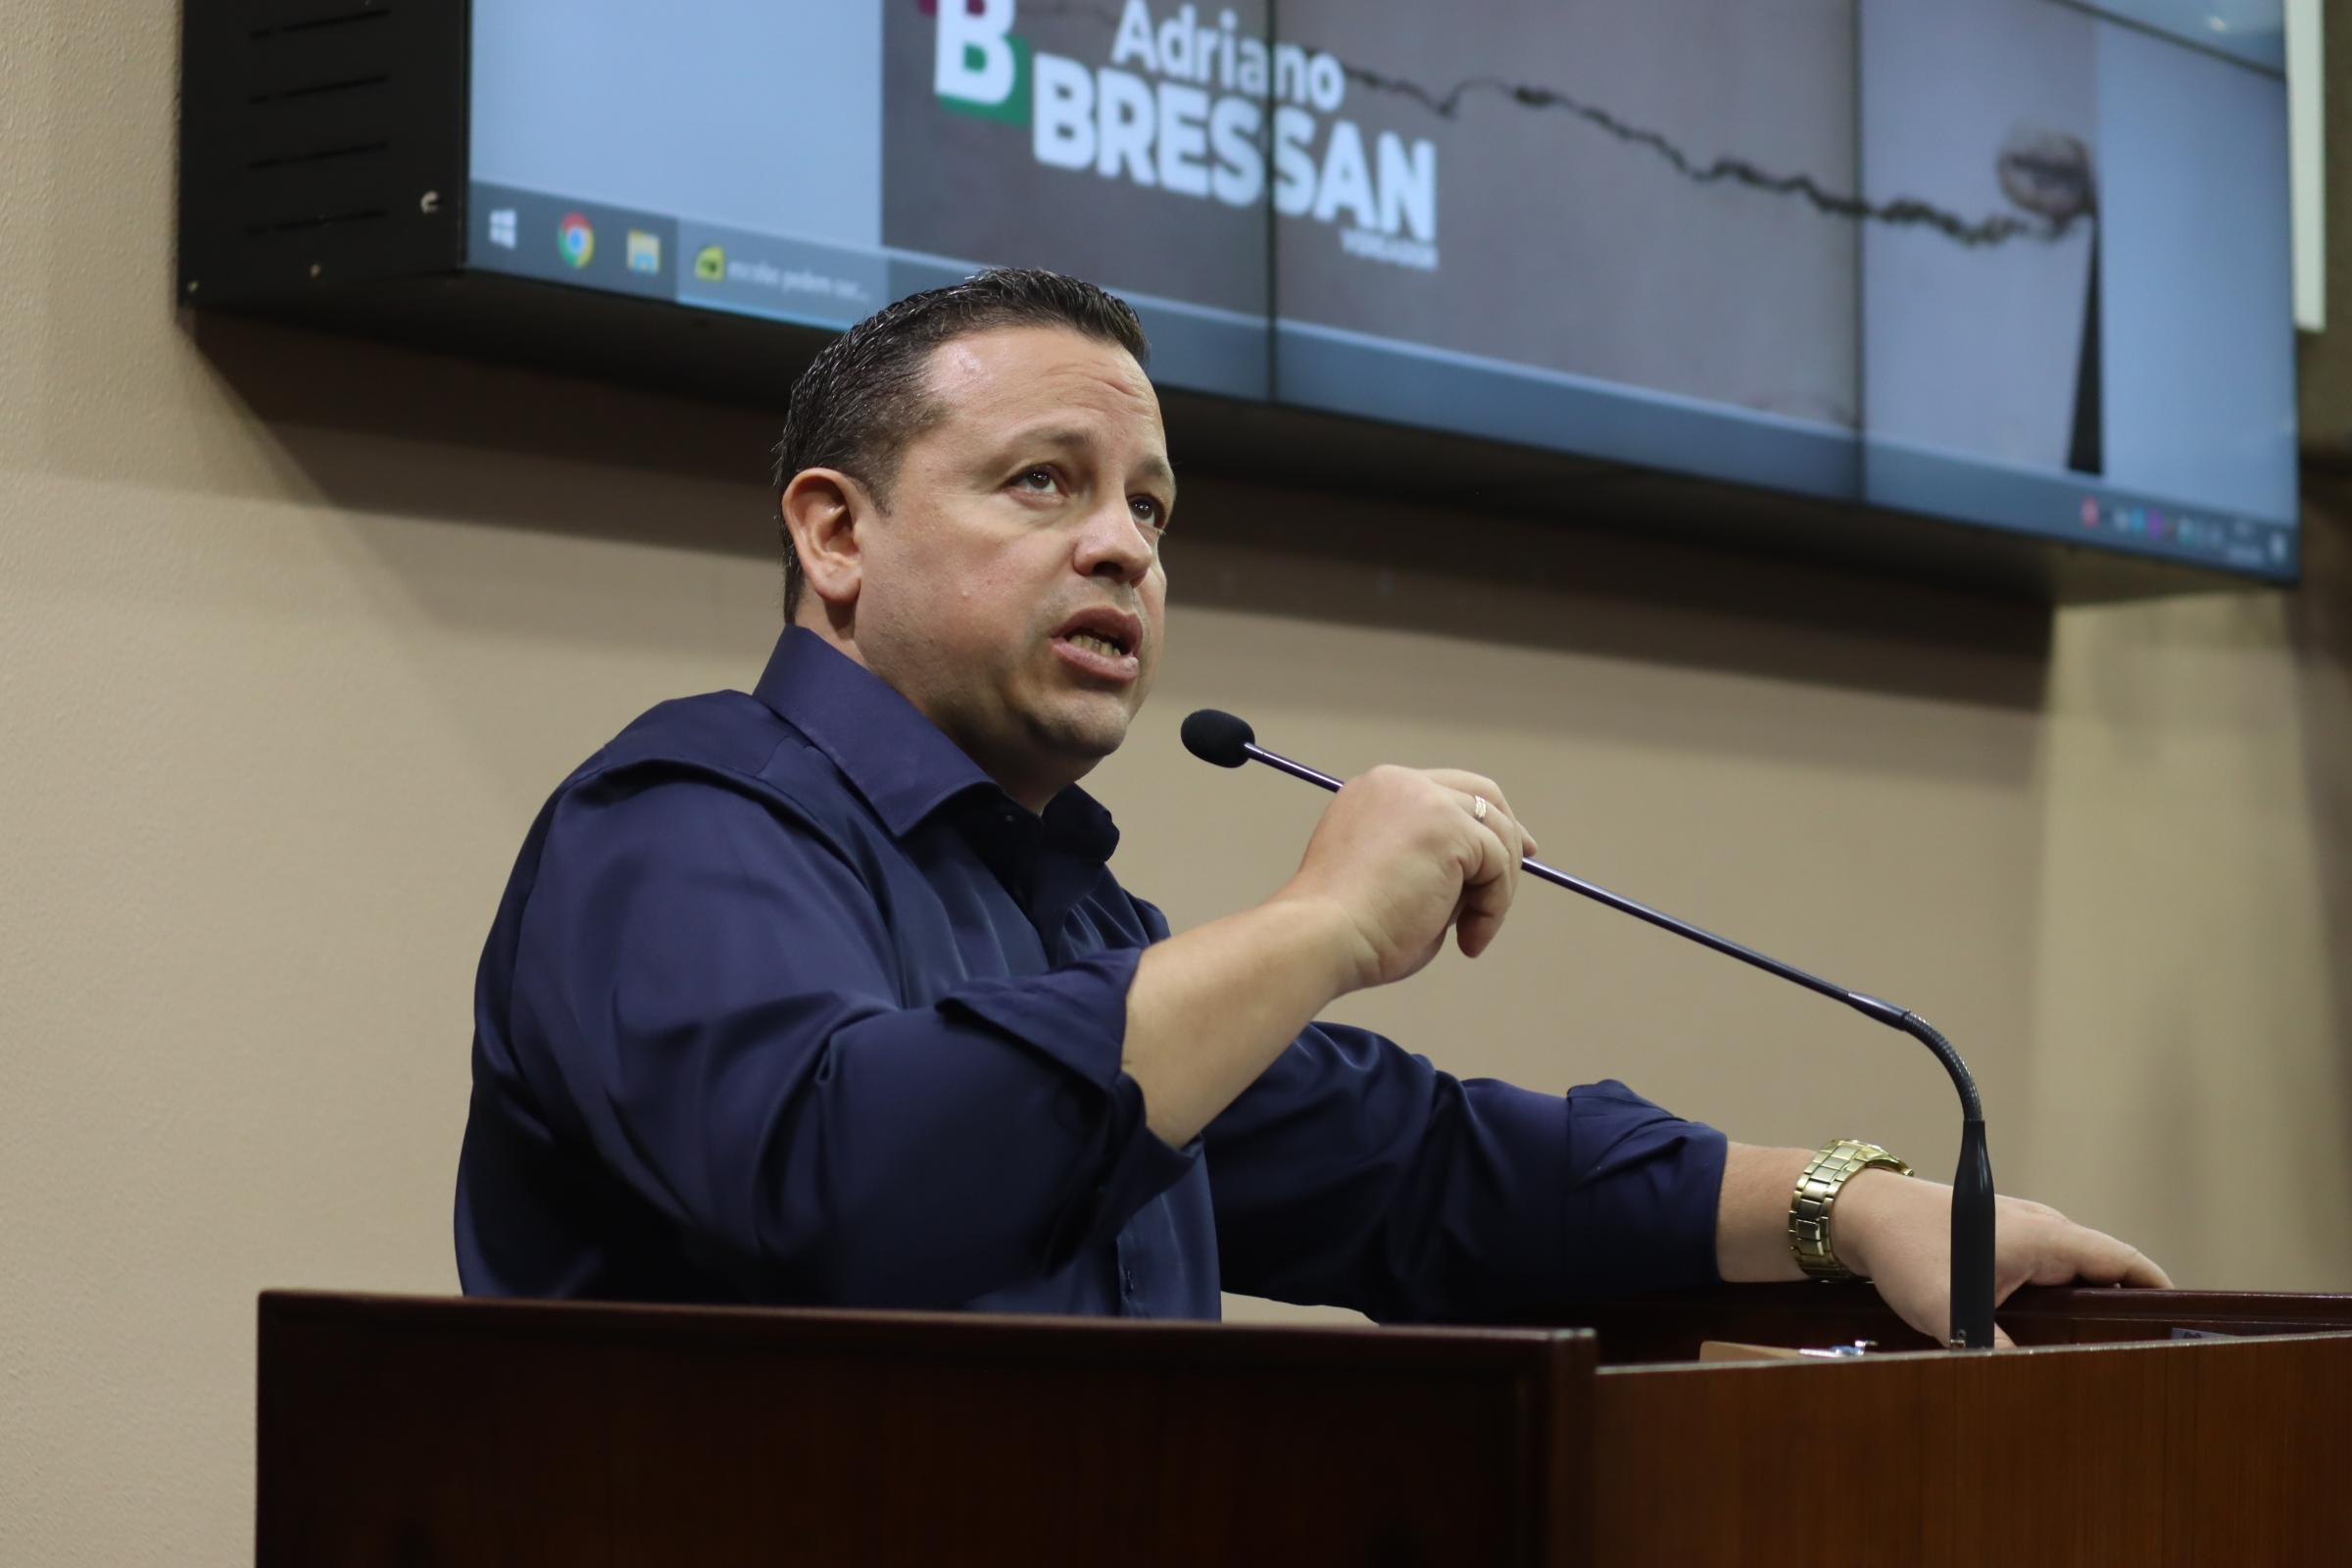 Adriano Bressan comenta precariedade das escolas estaduais de Caxias do Sul